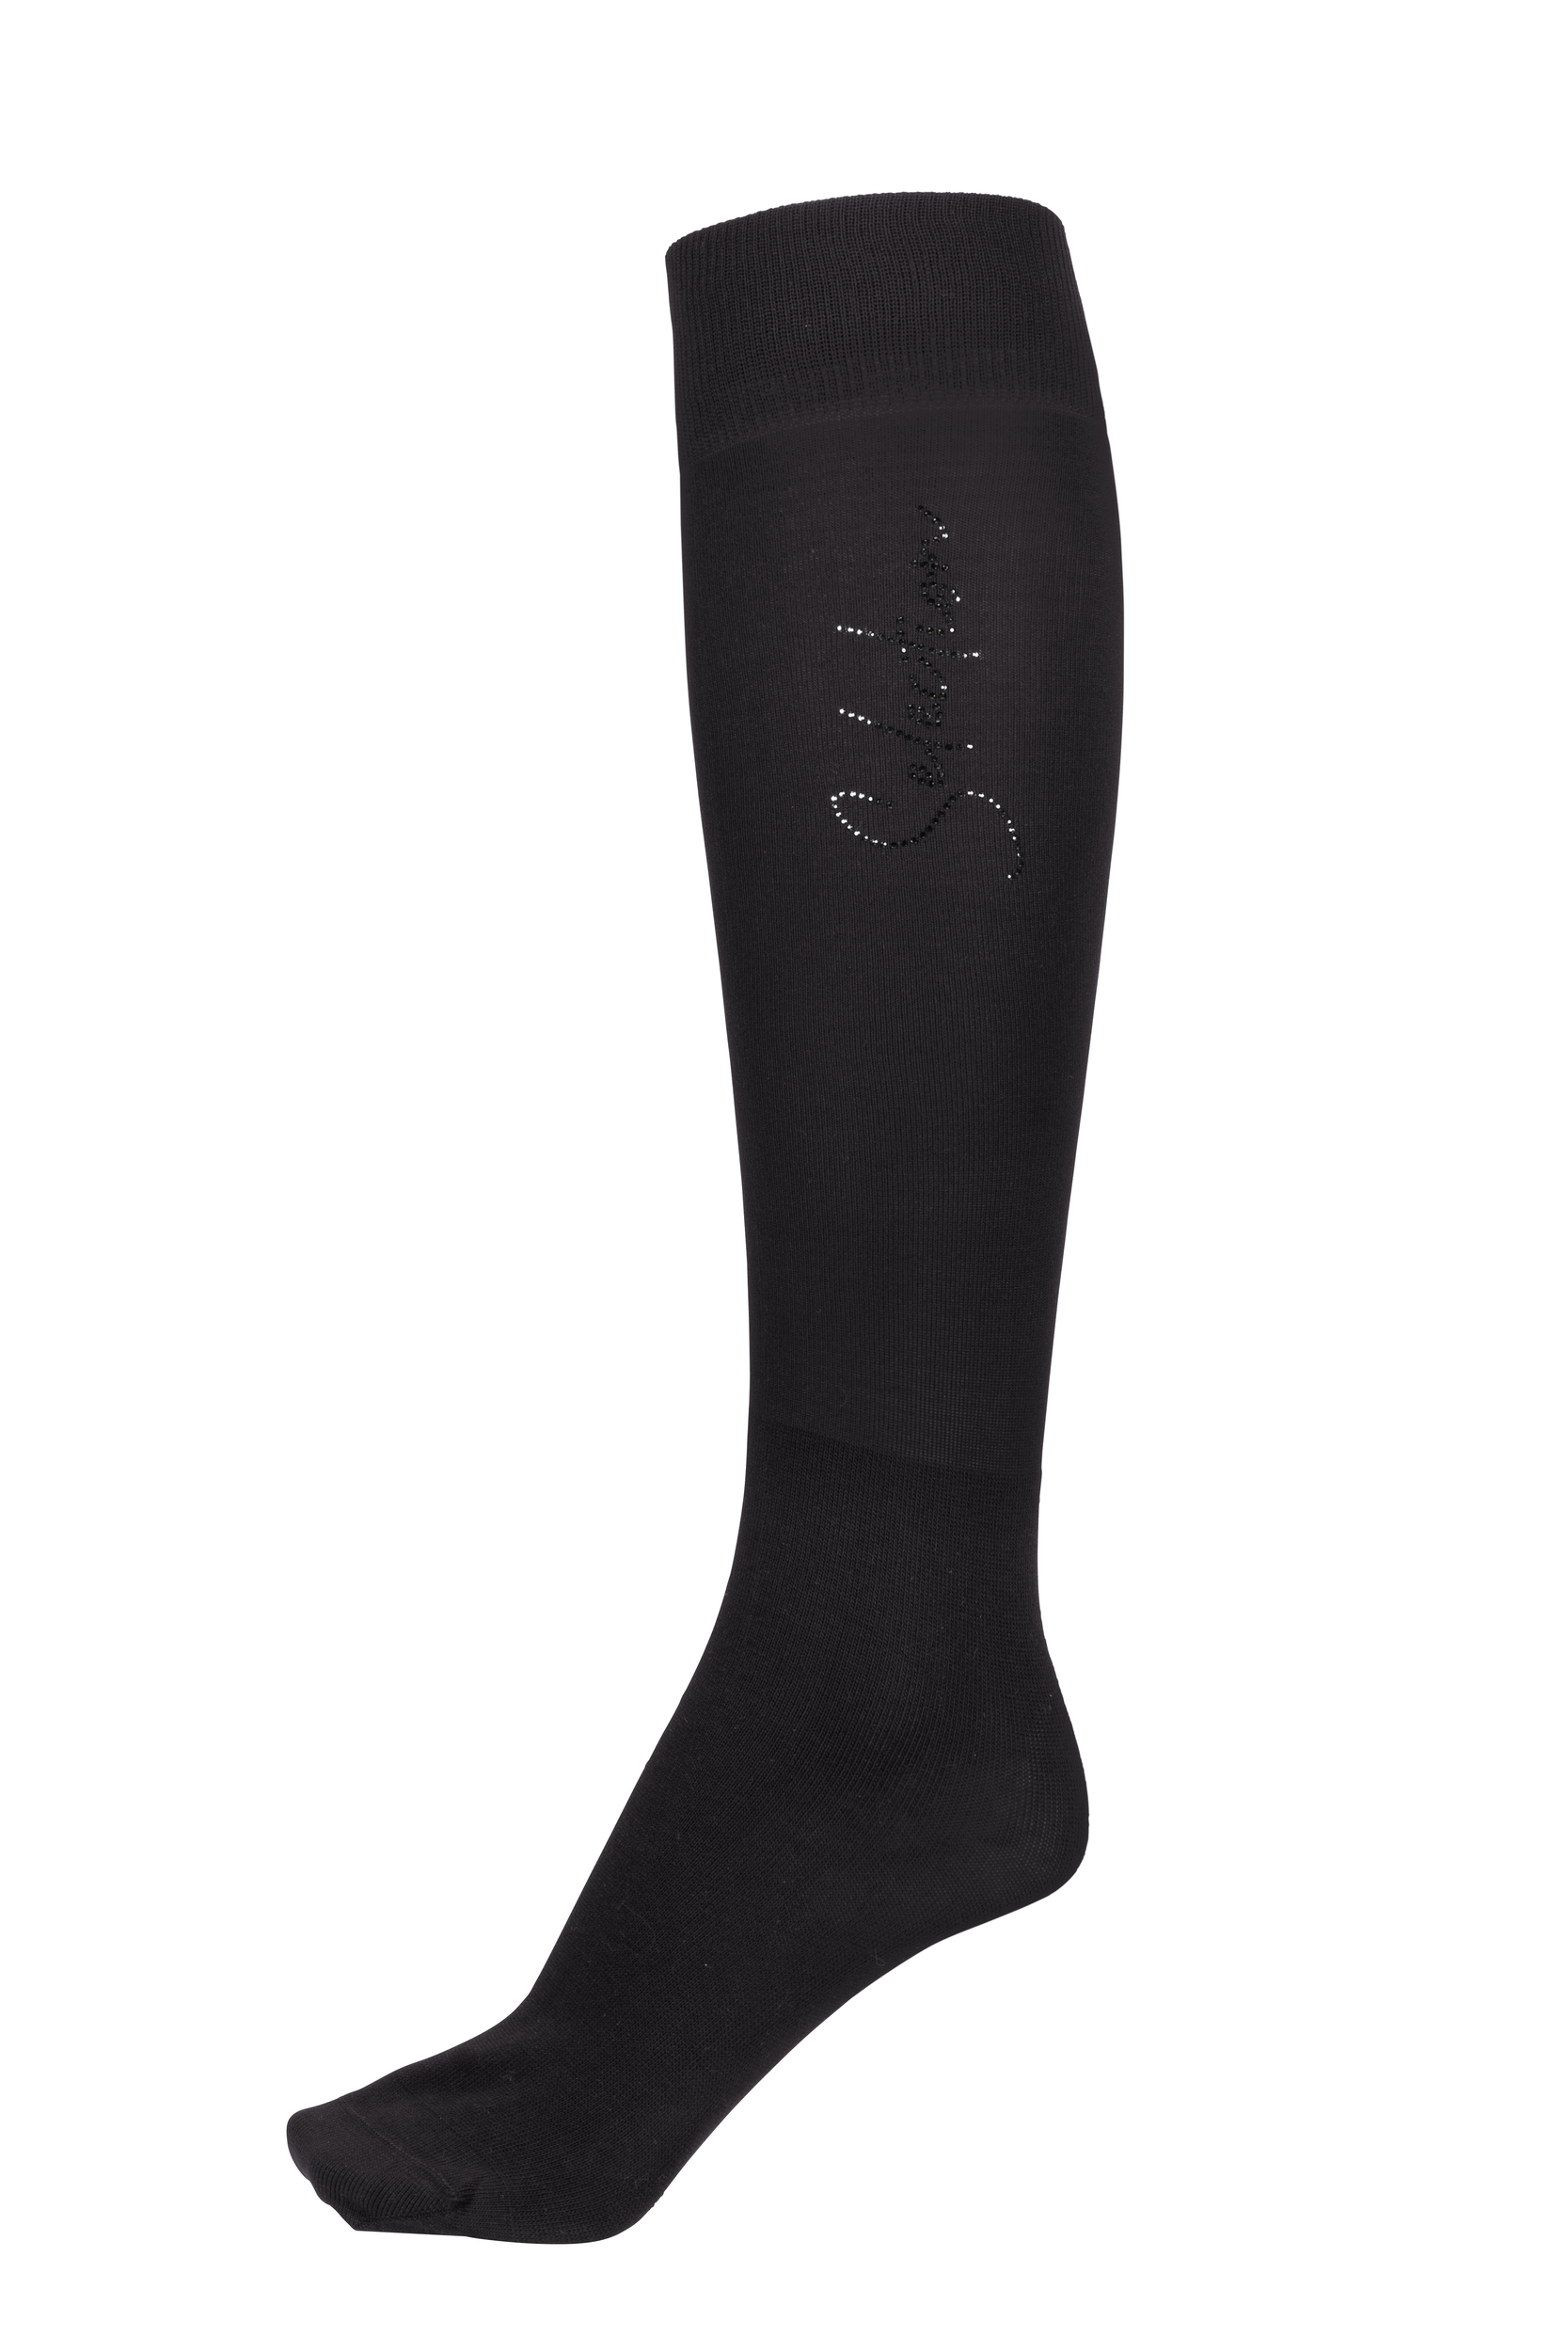 Reitsocken KNIE-STRUMPF Sportswear 22, schwarz